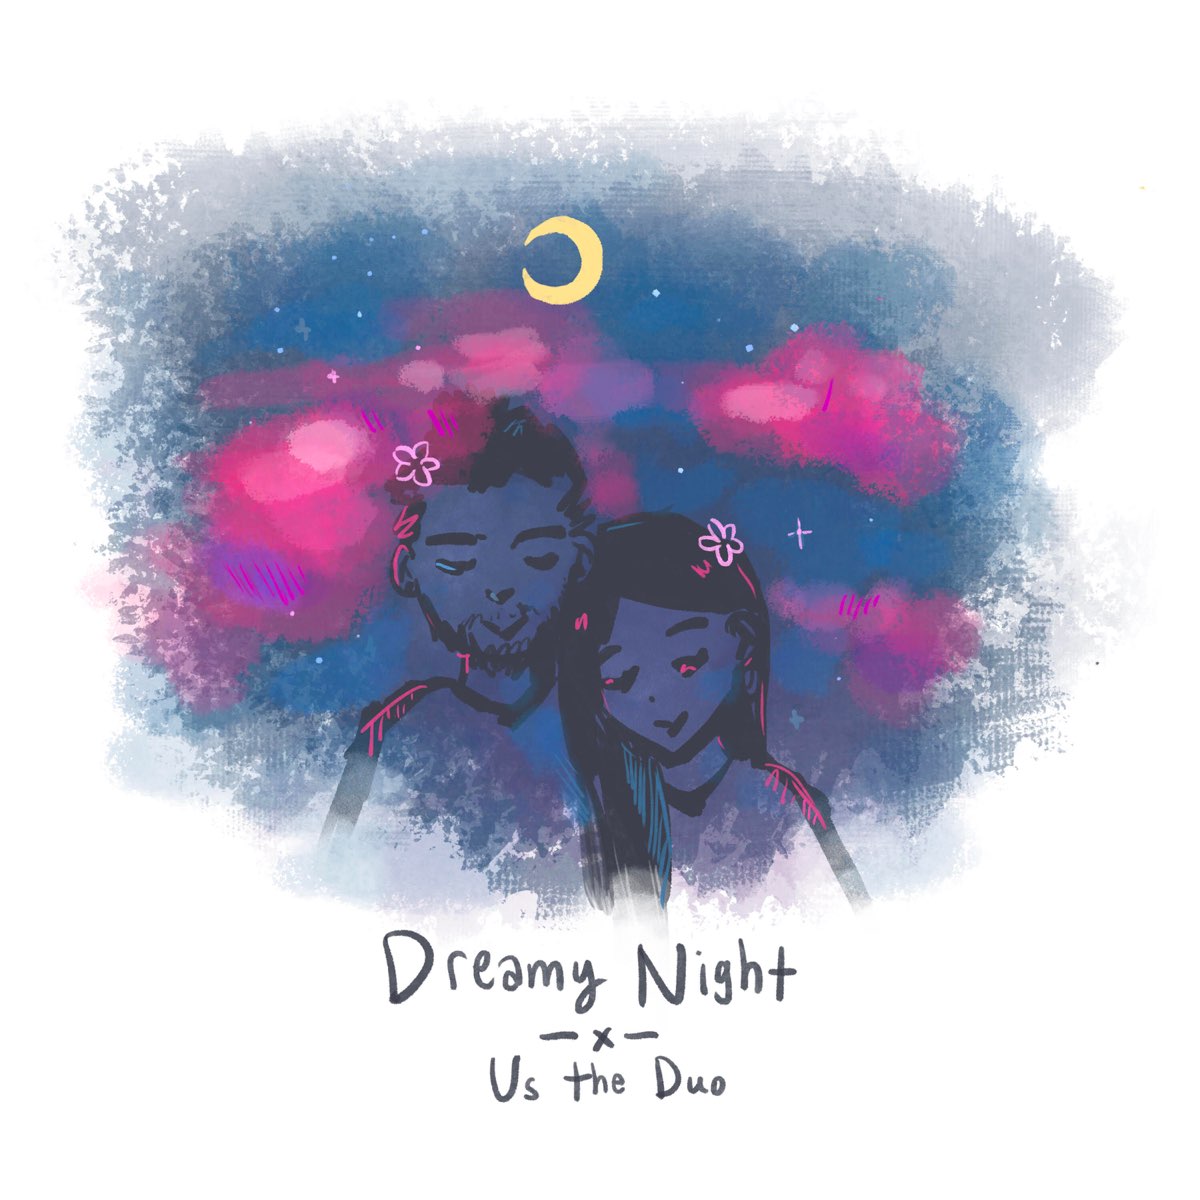 Night Dream. Night Dreams sx1nxwy. Flash Dreams in the Night Dazzle. Imazee Dream about you - Single. This night dream